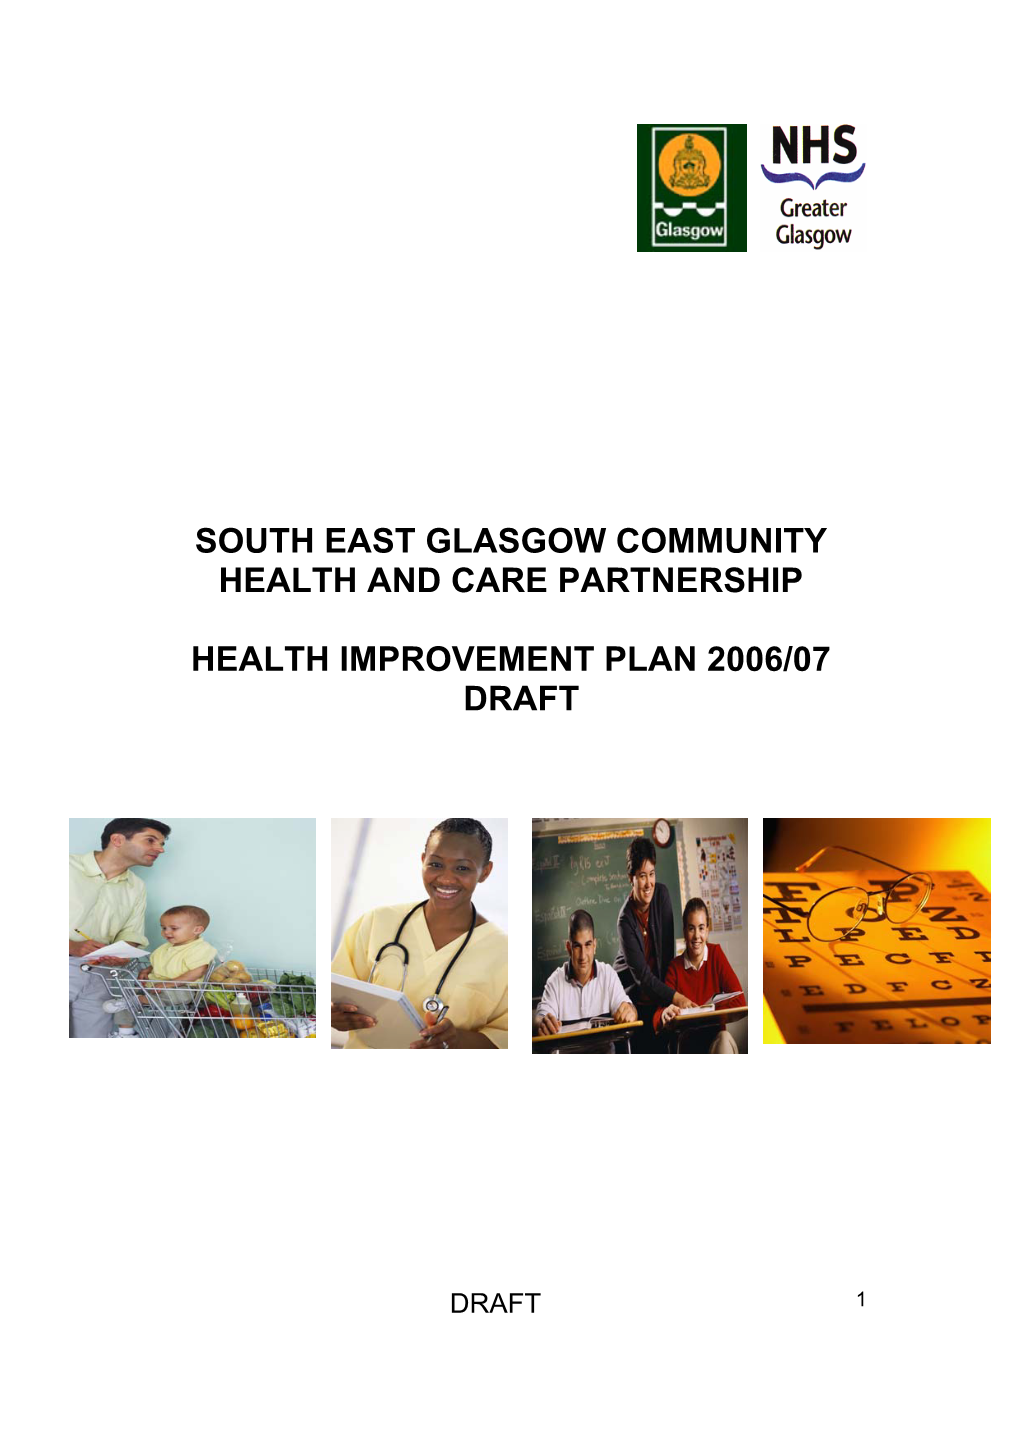 South East Glasgow Community Health and Care Partnership Health Improvement Plan 2006/07 Draft